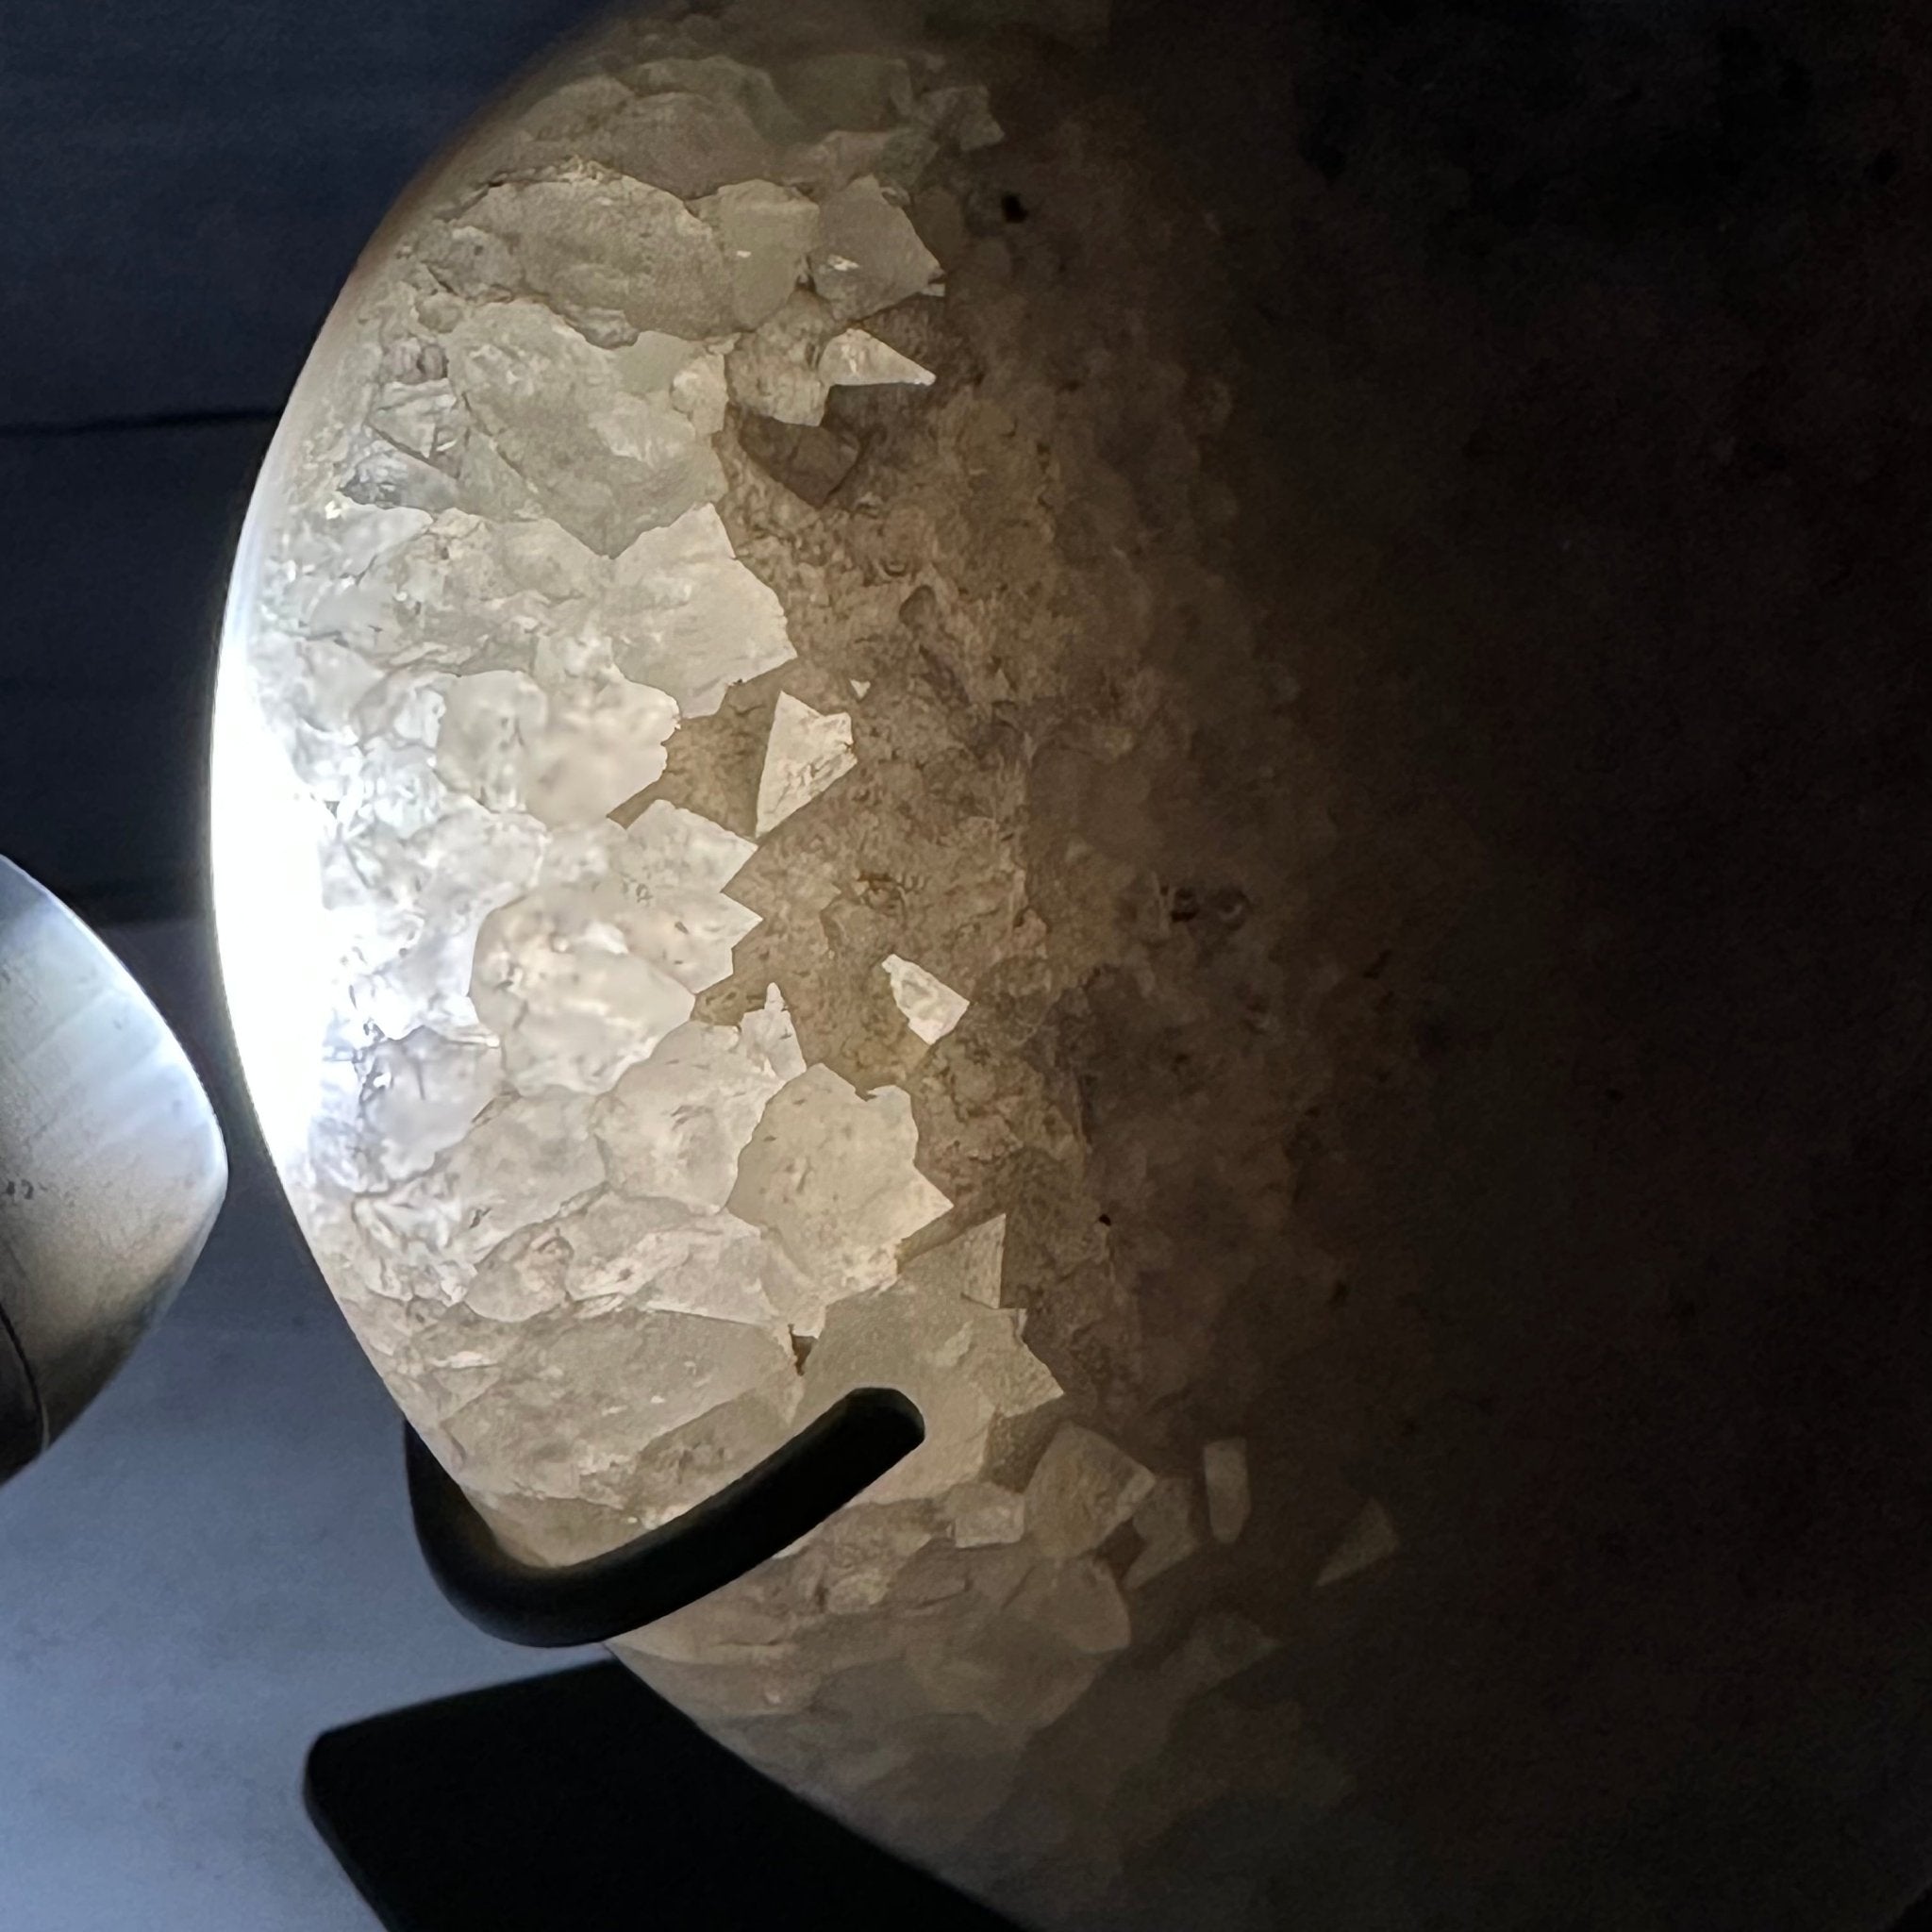 Polished Agate Heart Geode on a Metal Stand, 2.9 lbs & 5" Tall, Model #5468-0031 by Brazil Gems - Brazil GemsBrazil GemsPolished Agate Heart Geode on a Metal Stand, 2.9 lbs & 5" Tall, Model #5468-0031 by Brazil GemsHearts5468-0031